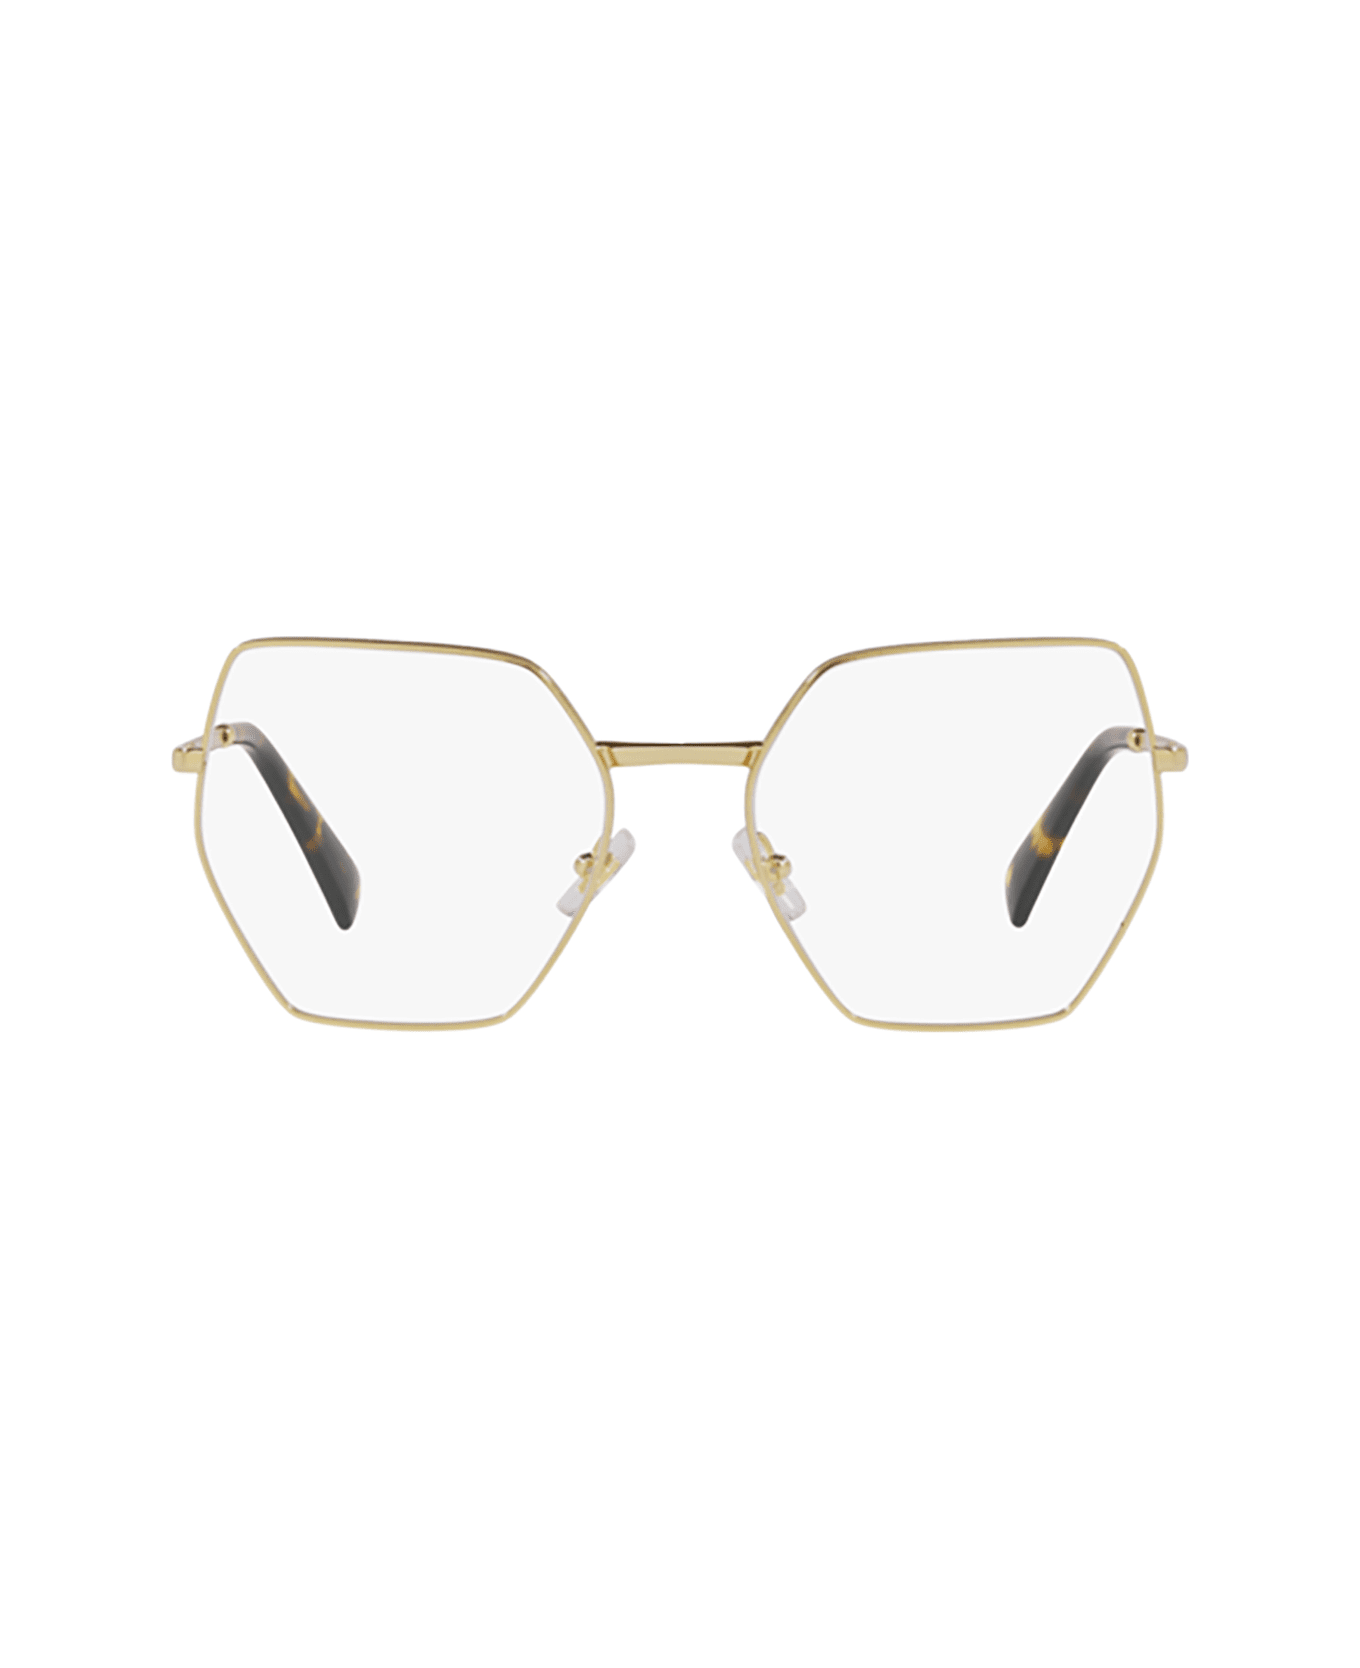 Miu Miu Eyewear Mu 50vv Gold Glasses - Gold